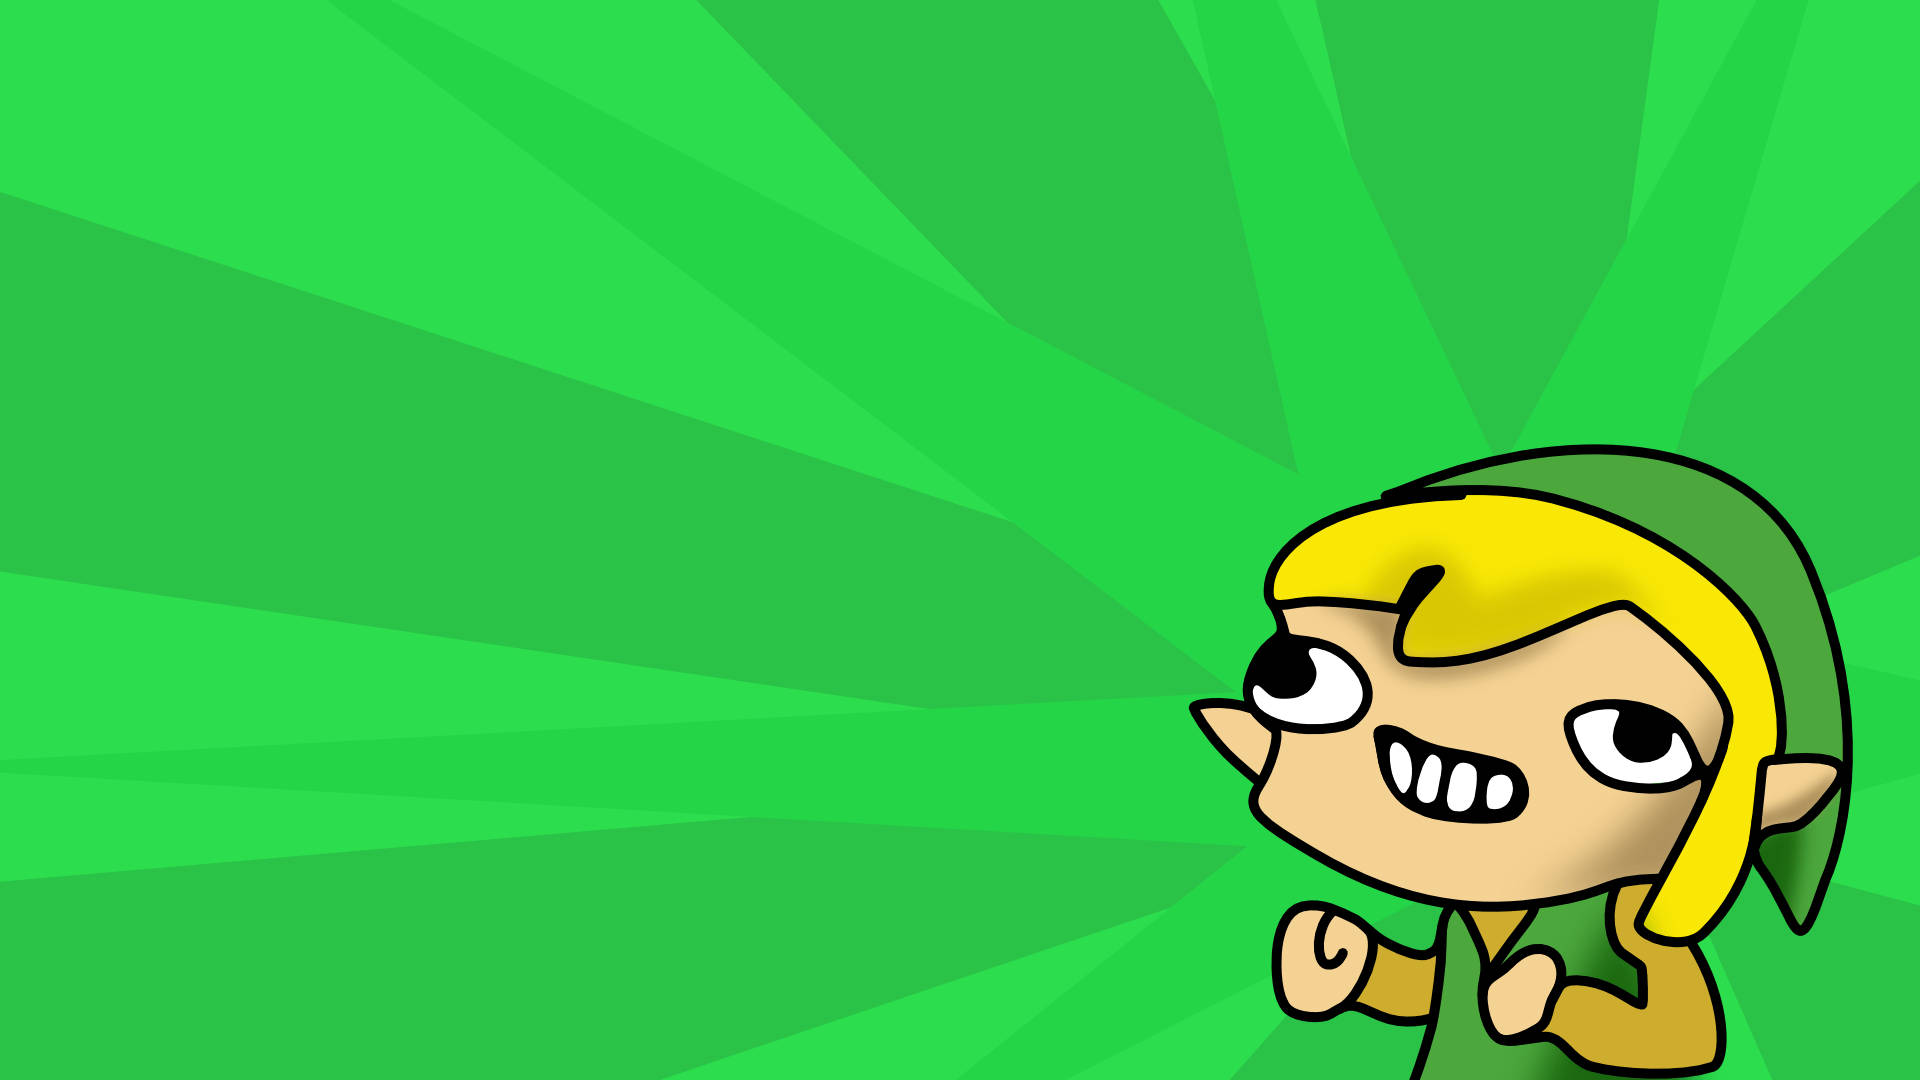 Derp Link Legend of Zelda meme with green elf showing excitement or amazement, funny emotion.